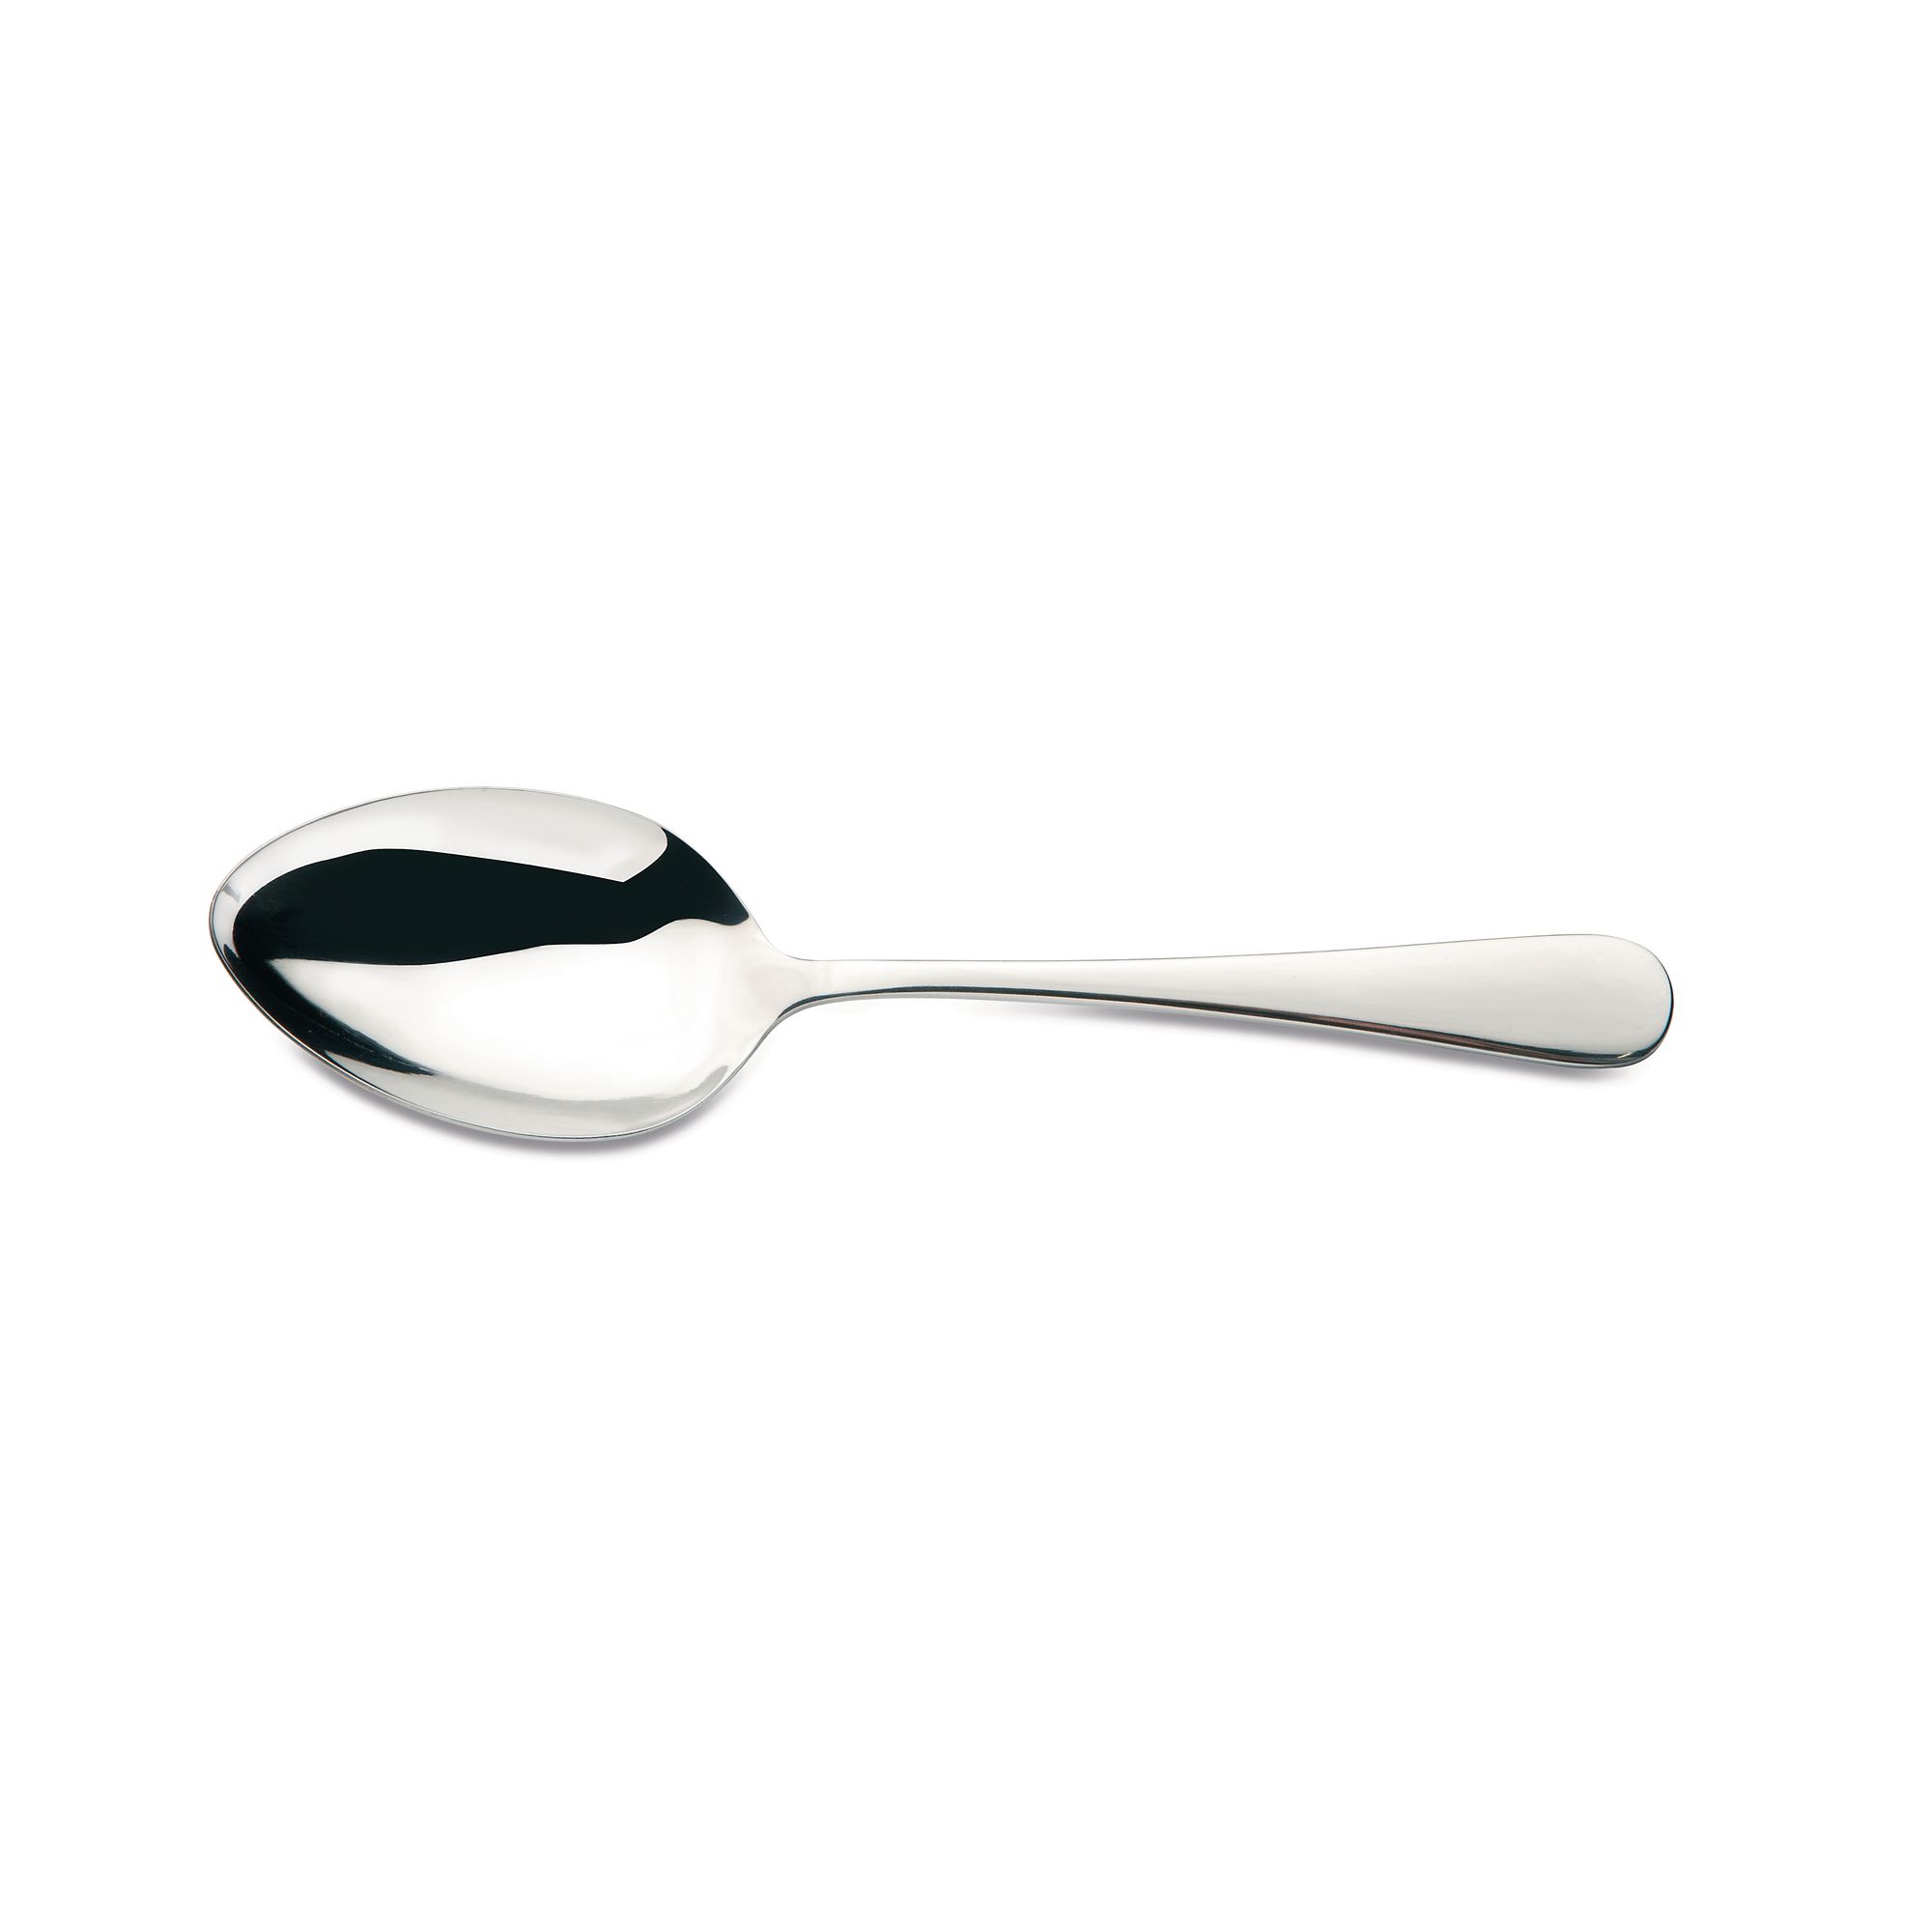 Serving Spoon 23cm